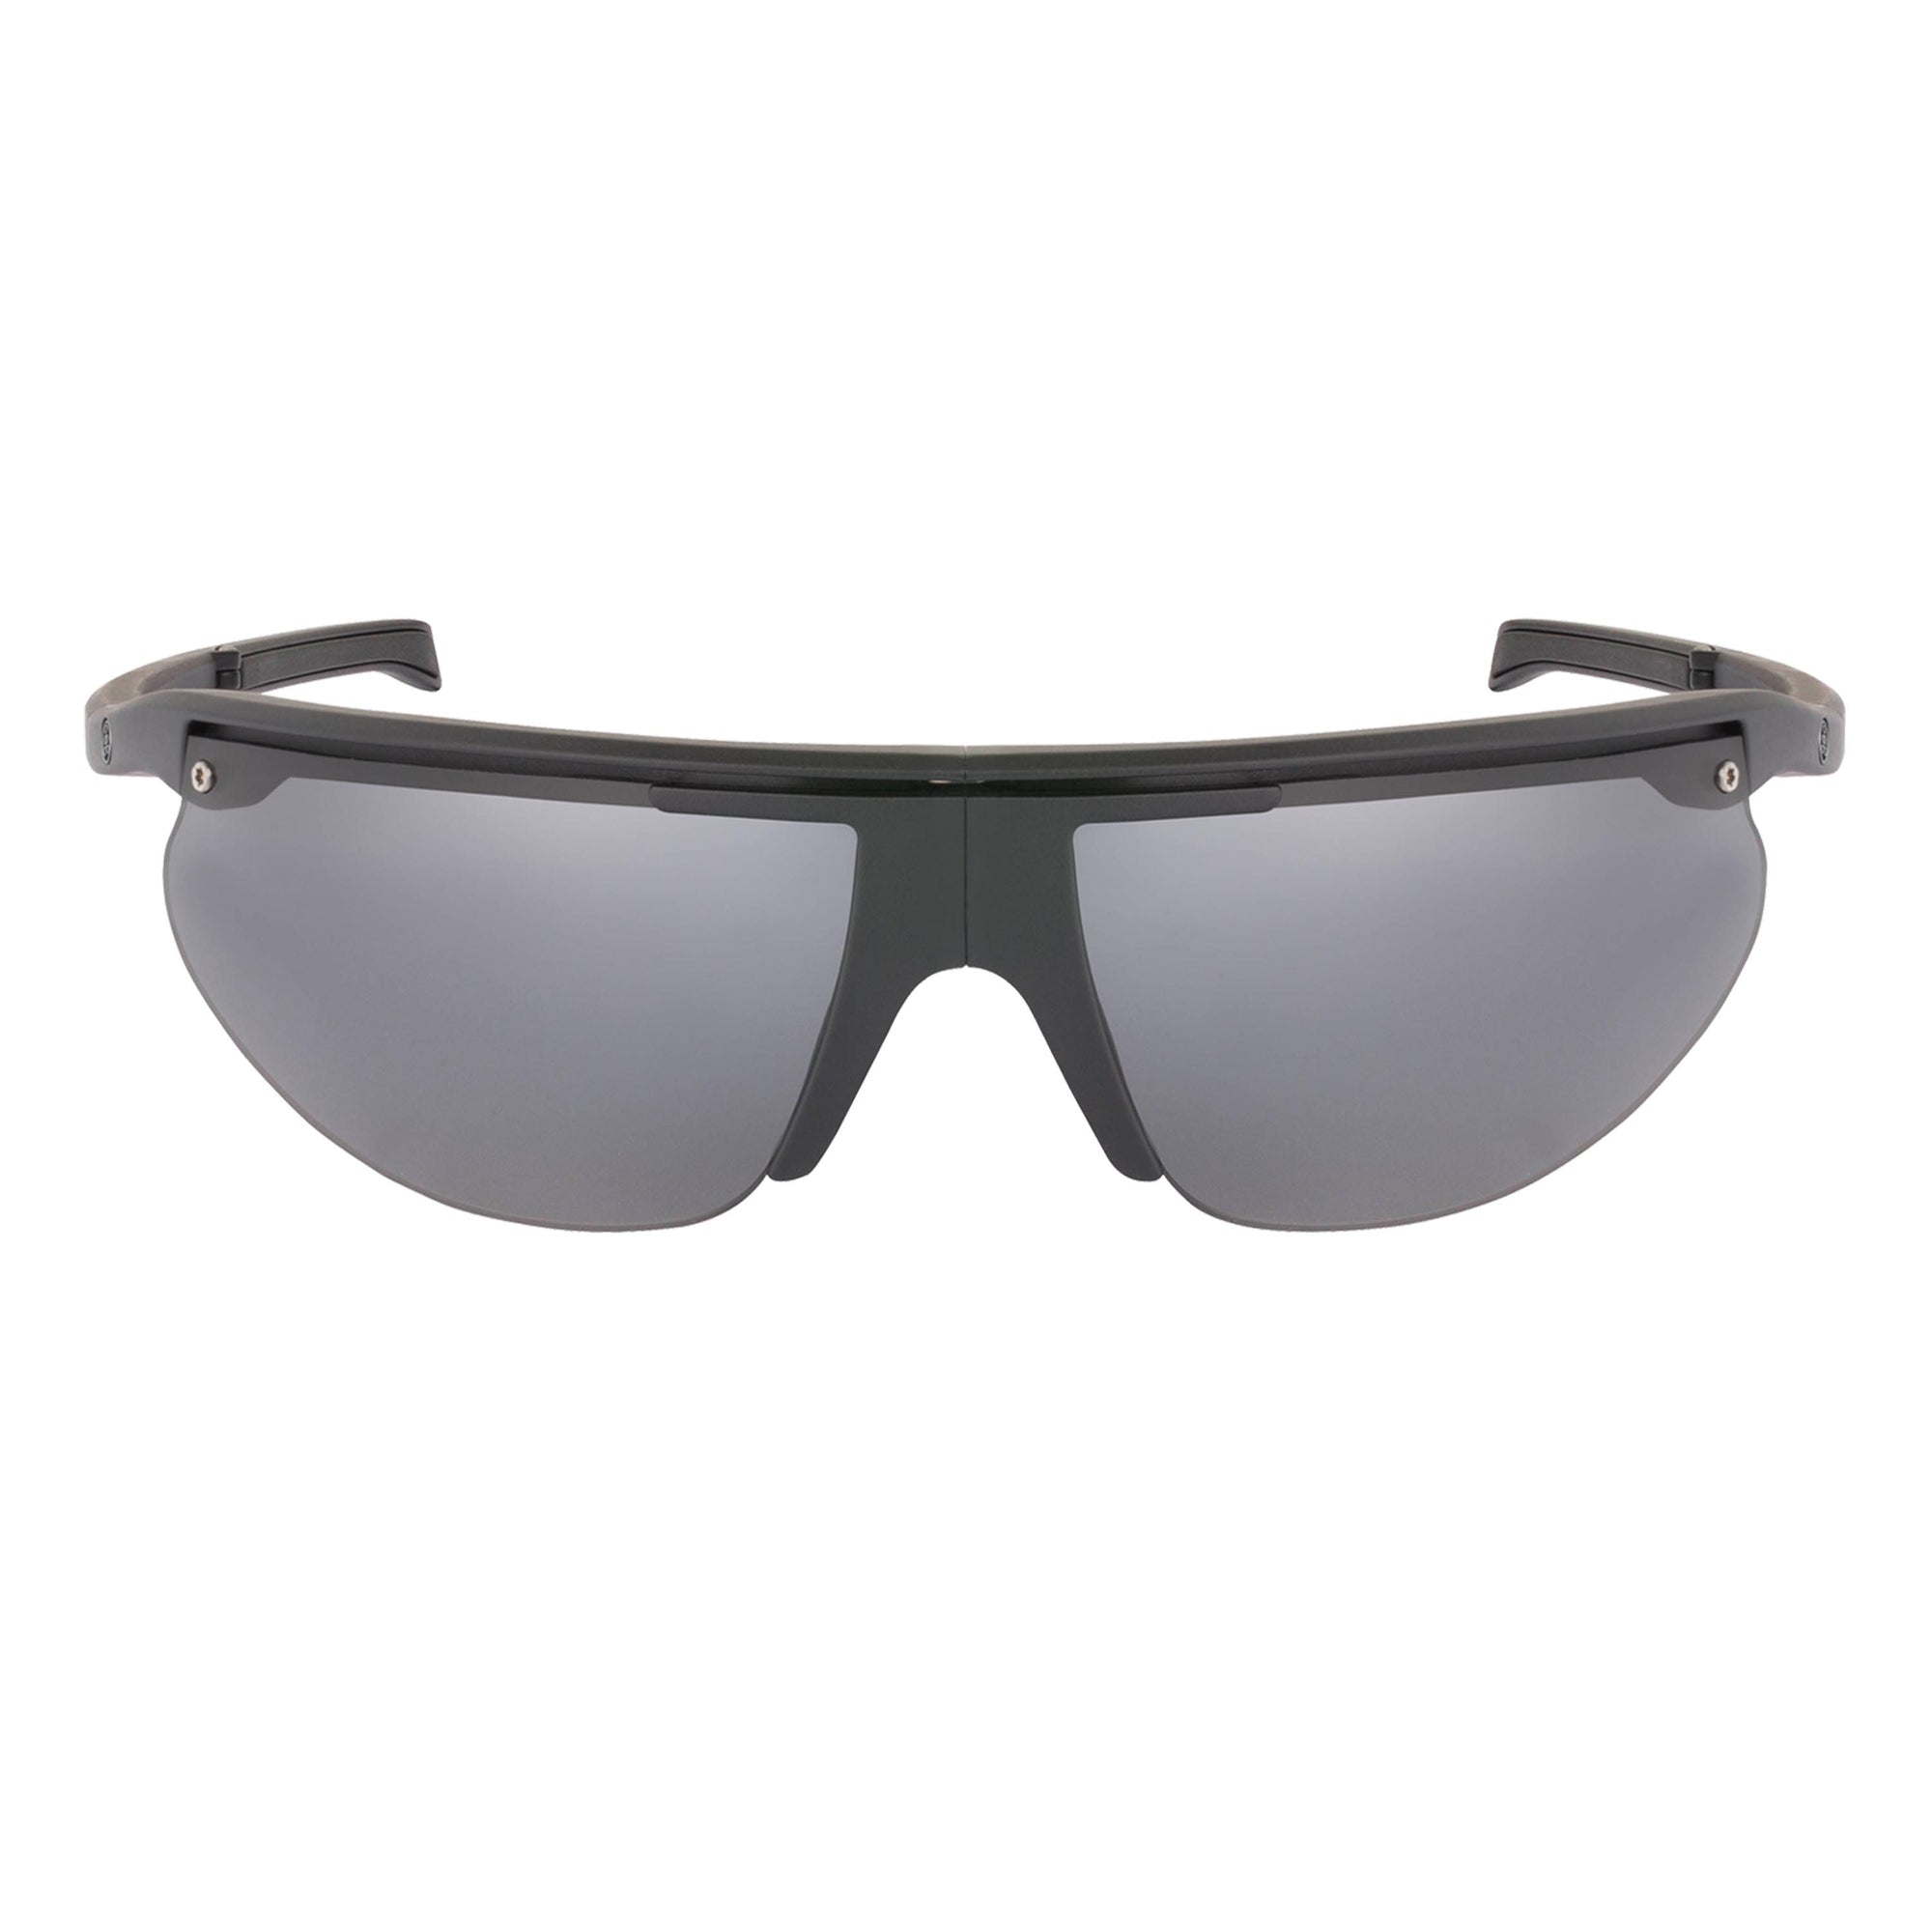 Popticals, Premium Compact Sunglasses, PopTrail, 010081-BMGP, Polarized Sunglasses, Matte Black Frame, Gray Lenses, Glam View